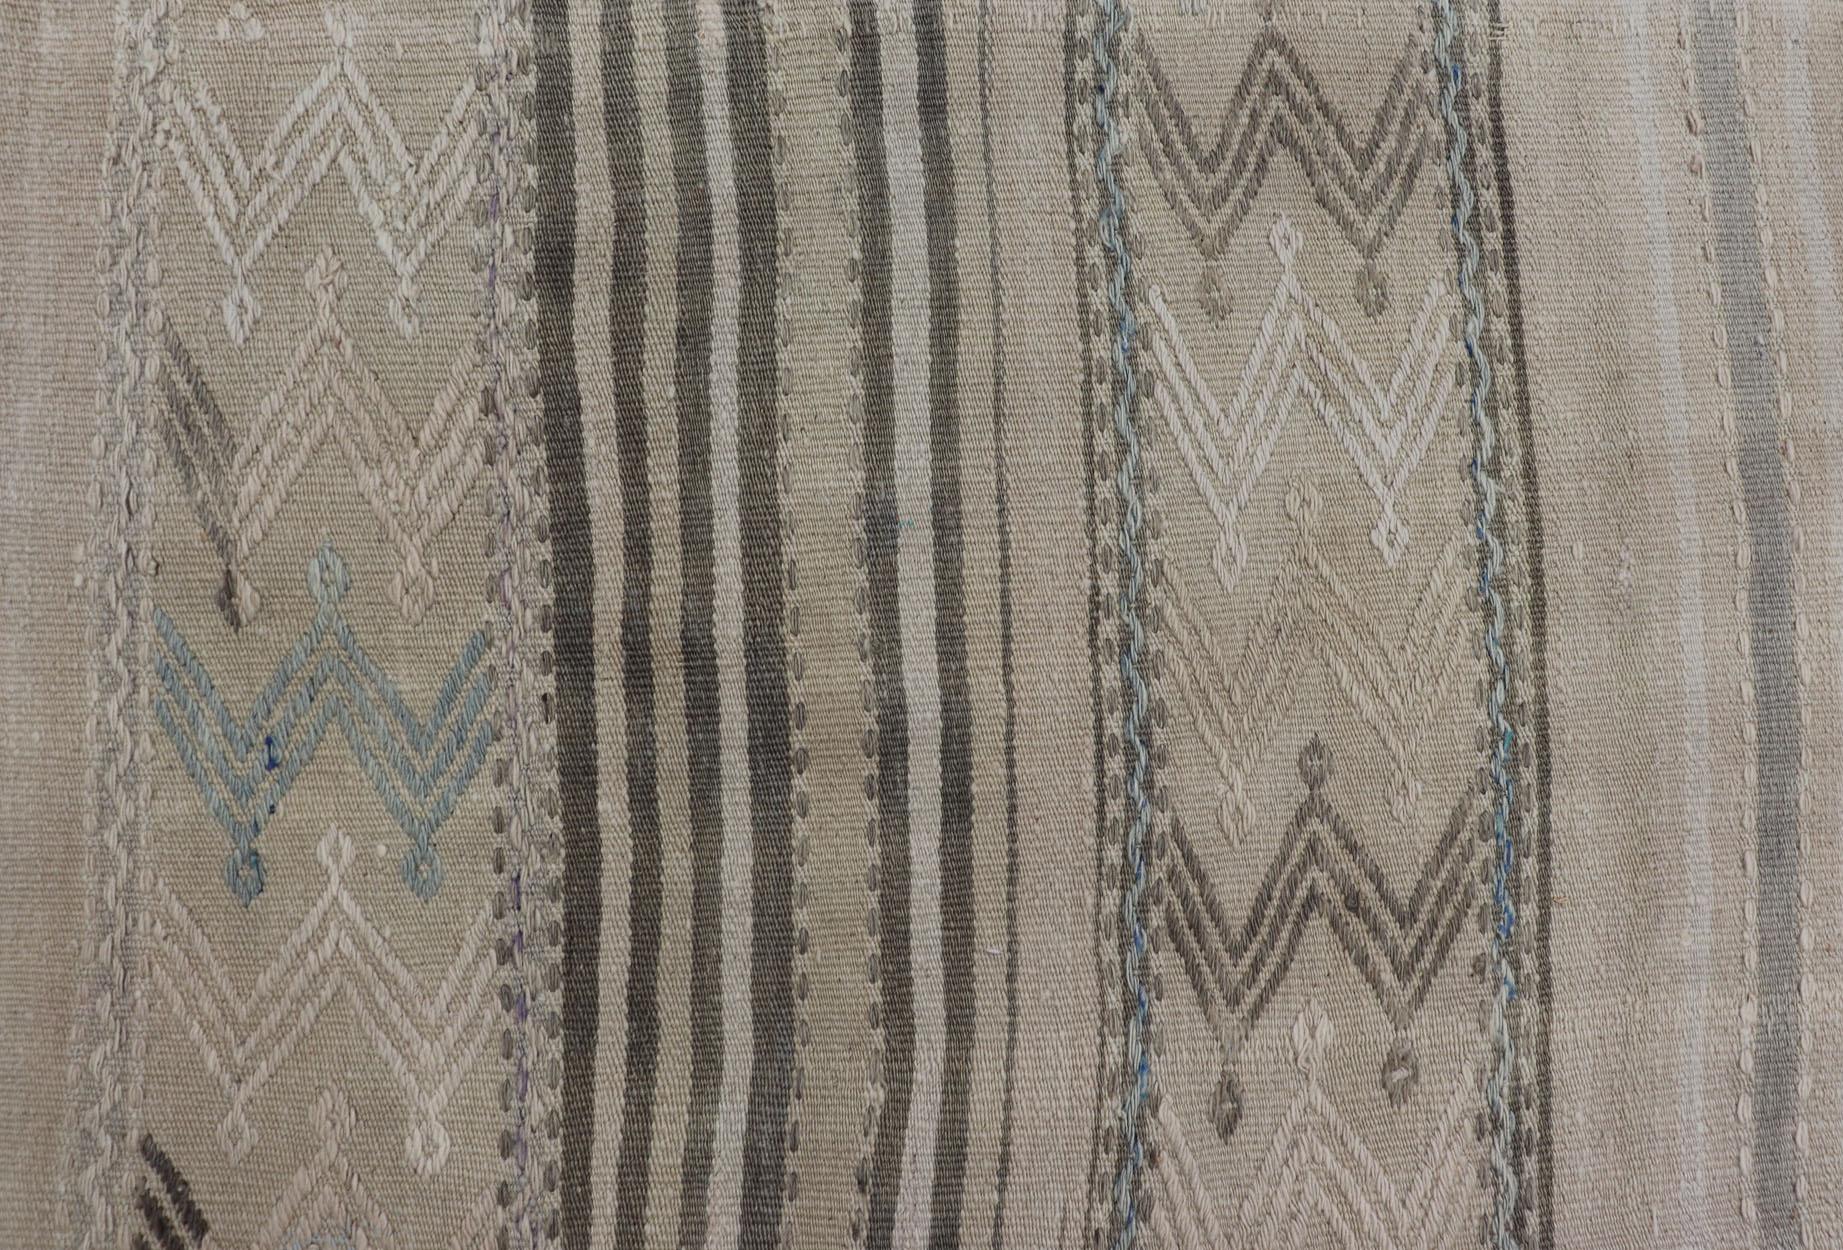 Vintage flat-weave Kilim with embroideries in tan, blue-gray with a modern design geometric stripe design Vintage Kilim from Turkey. Keivan Woven Arts /  rug EN-179491, country of origin / type: Turkey / Kilim, circa 1950
Measures:4'6 x 6'7 
This